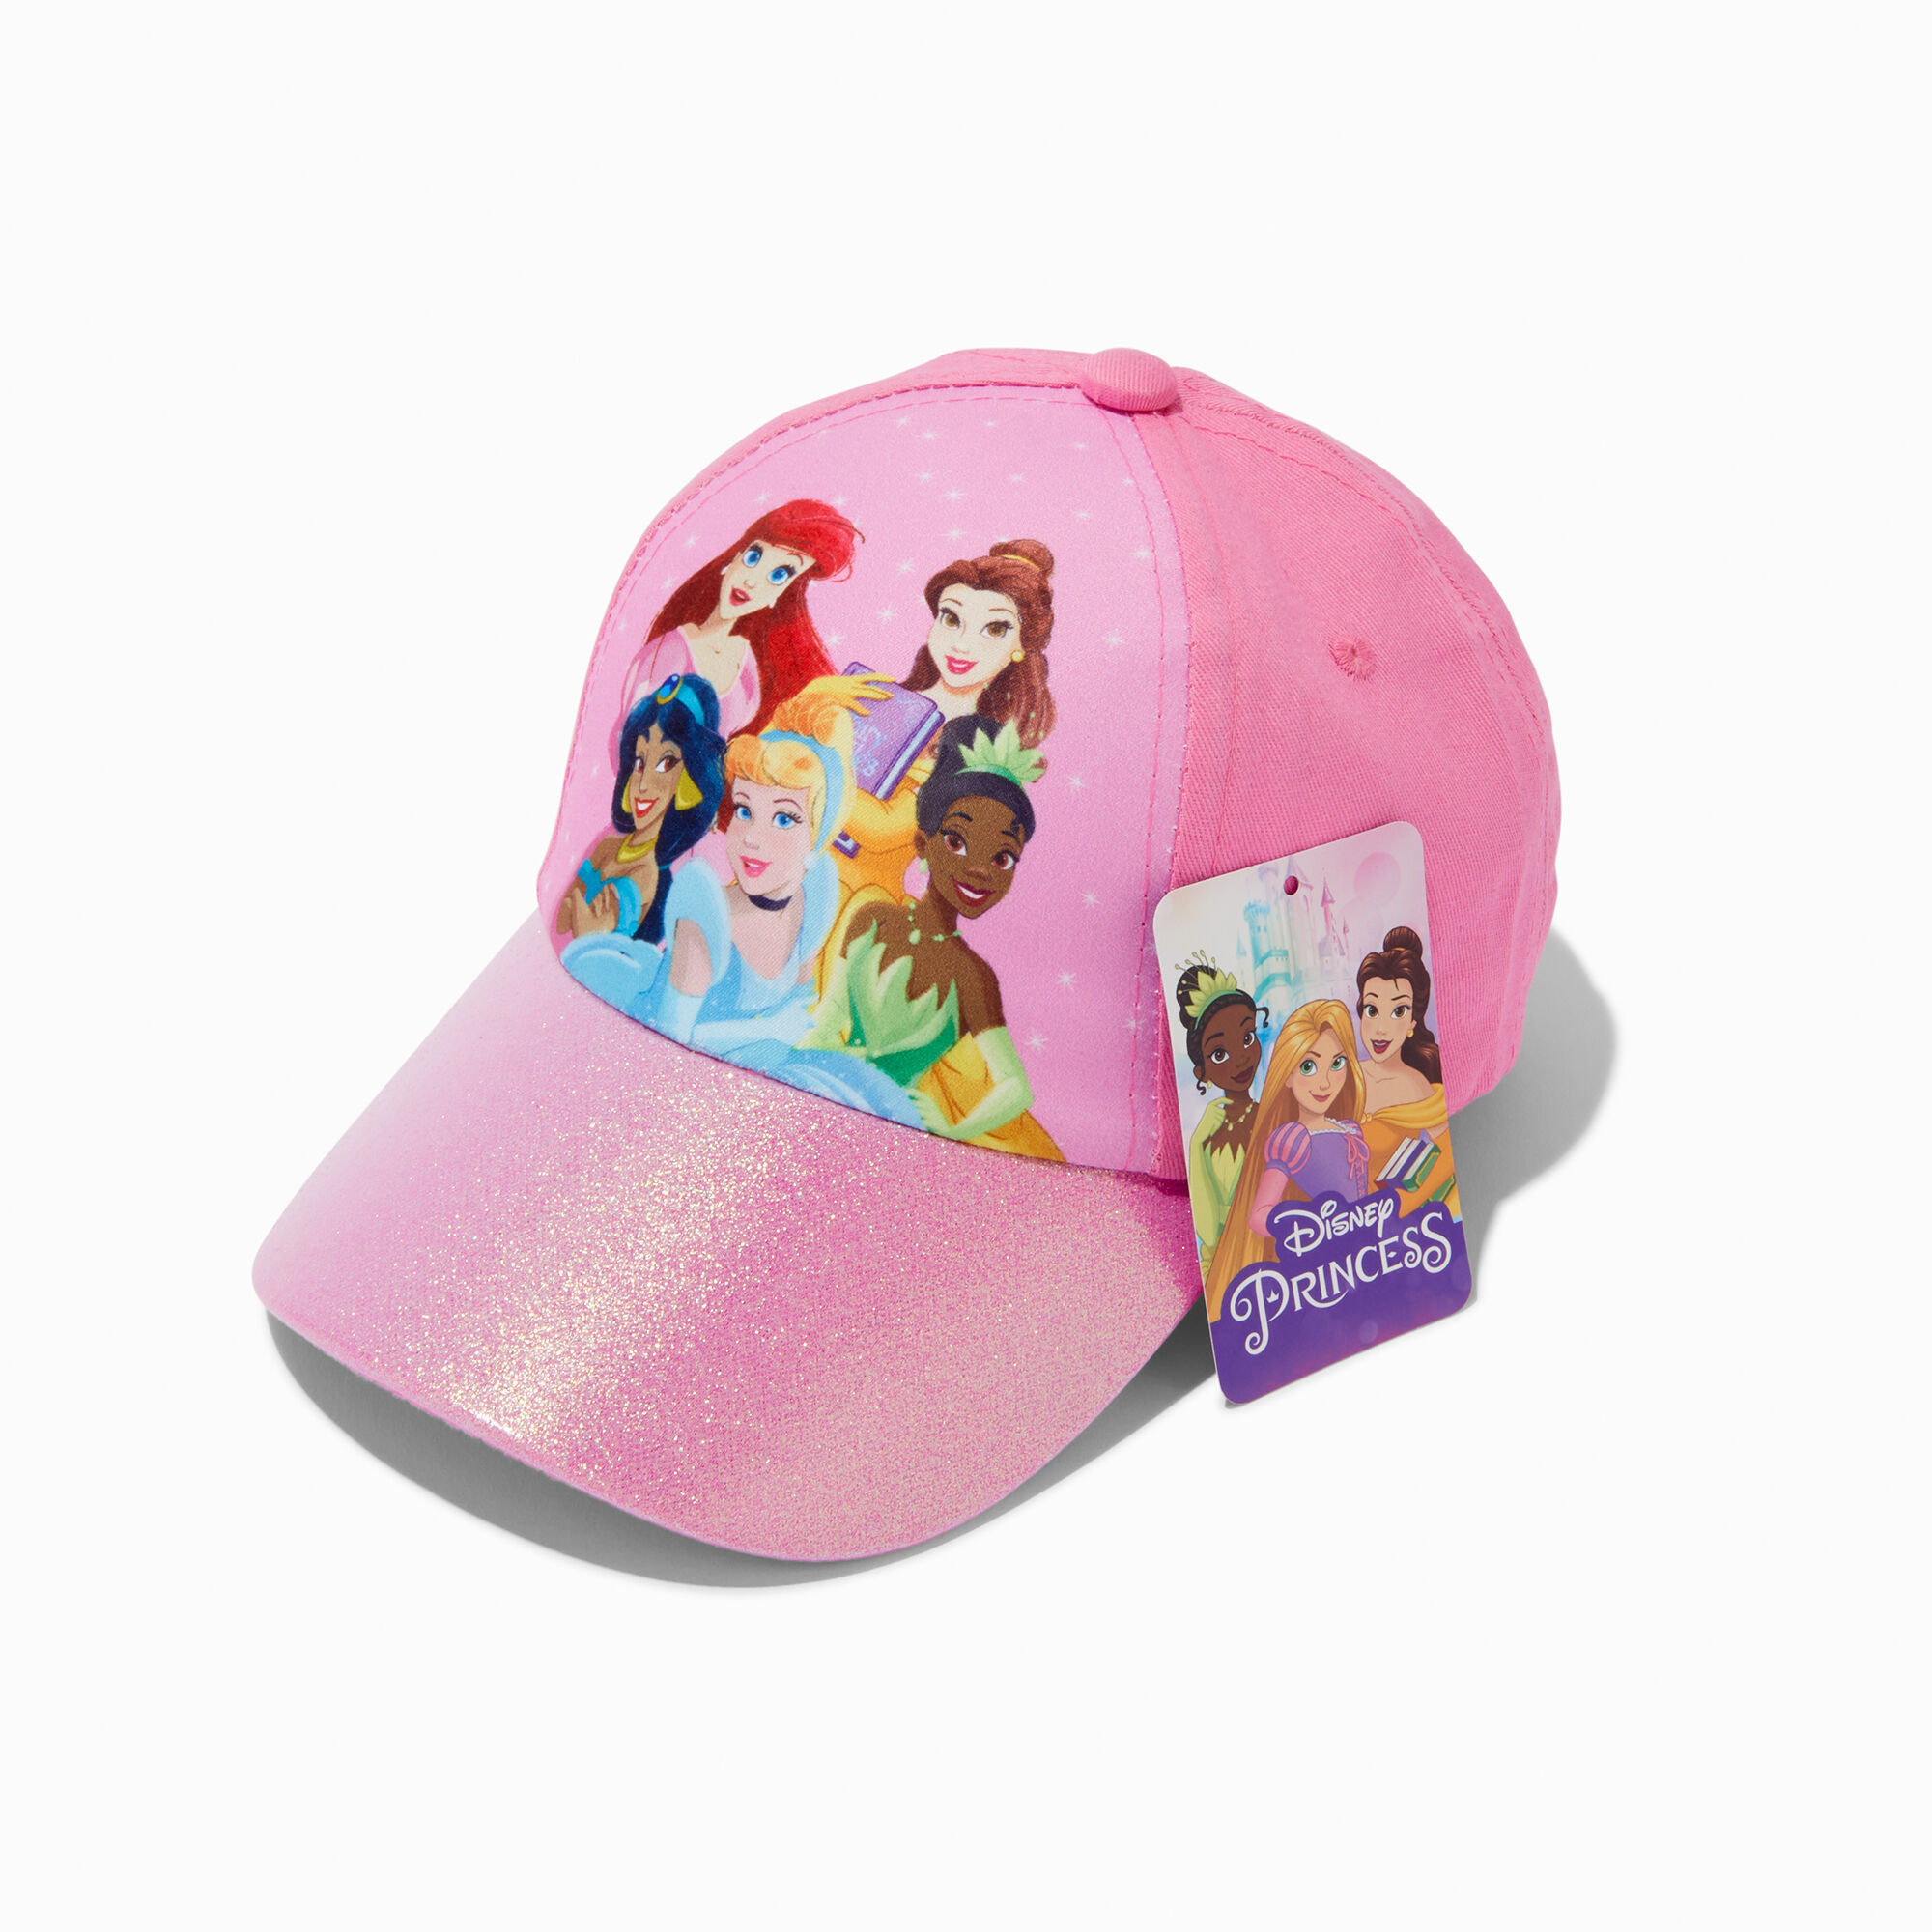 View Claires Disney Princess Adjustable Cap Pink information